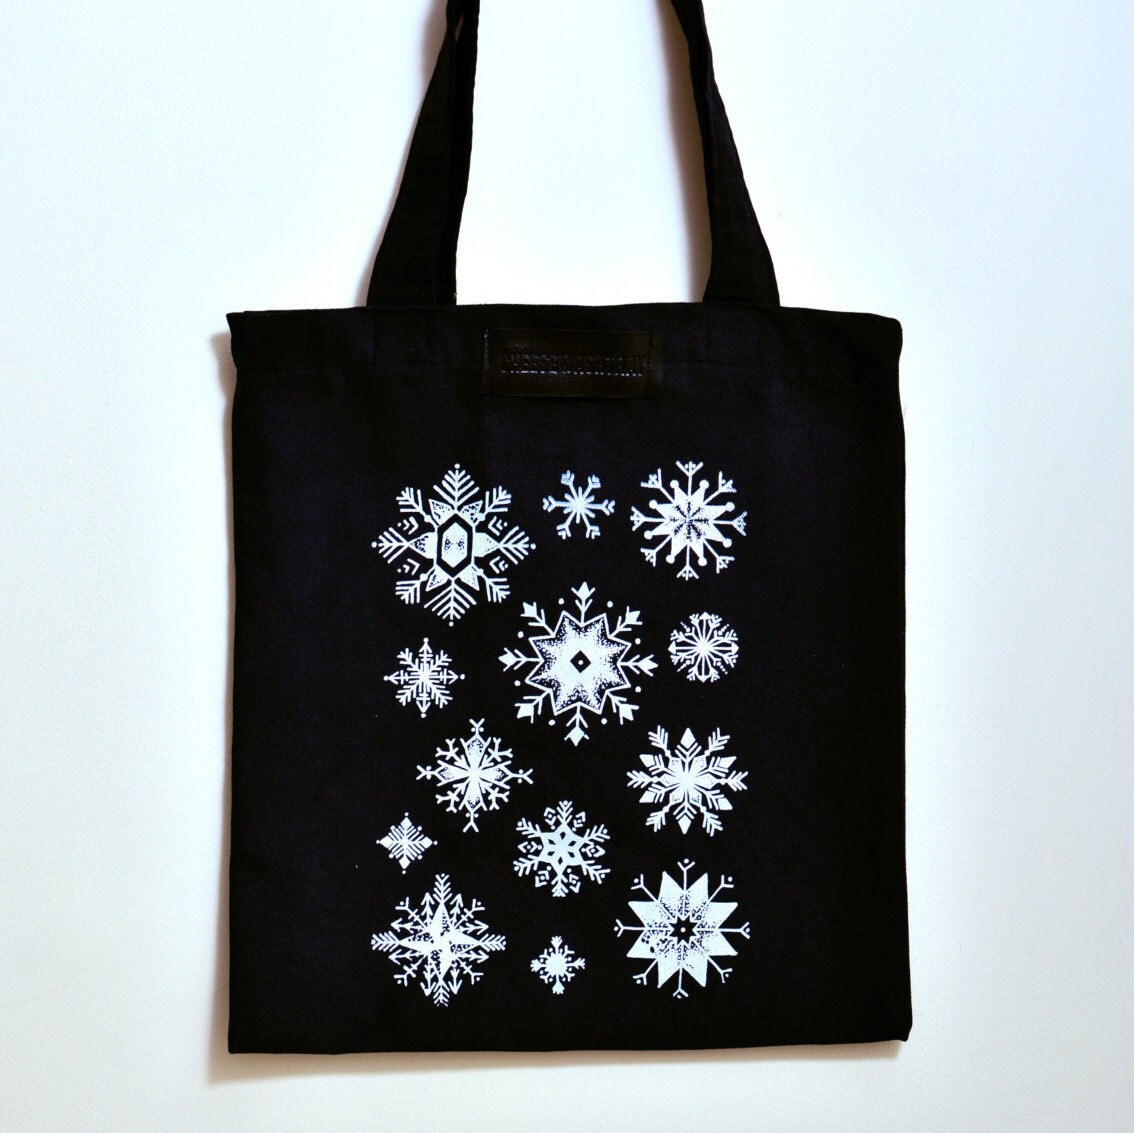 Snowflake tote bag black and white bag snow by CheeseAndAshtray